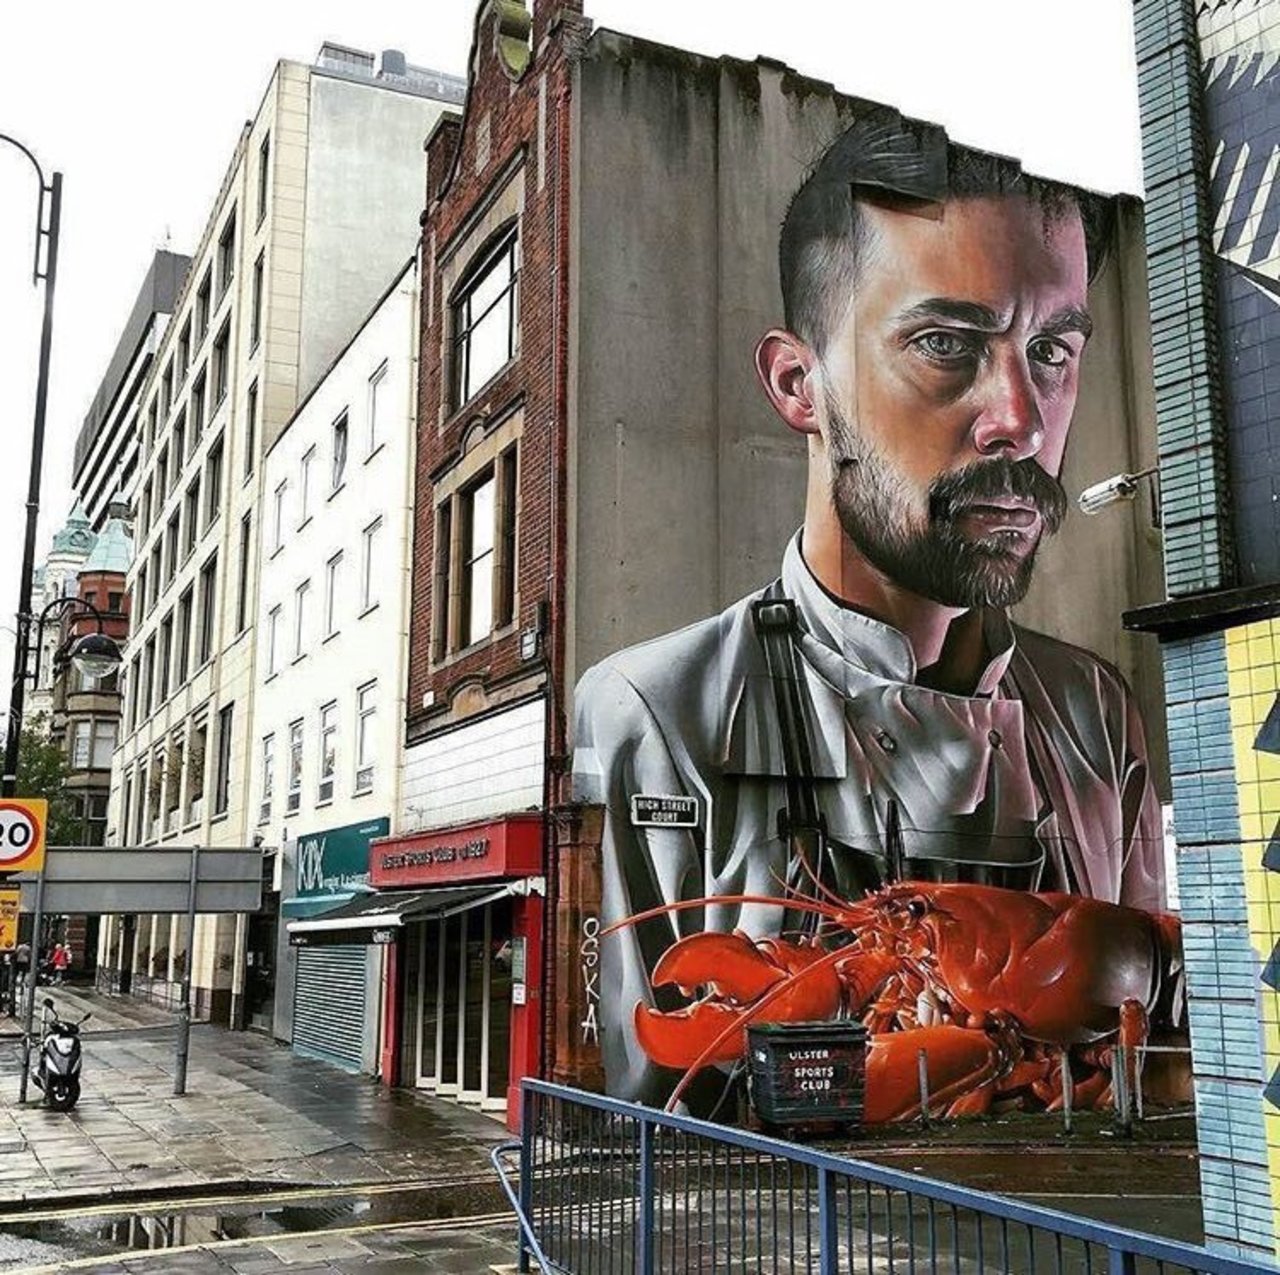 #mural by Smug One #Belfast #Ireland #art #graffiti #streetart #urbanart https://t.co/yjGcFQTdhm